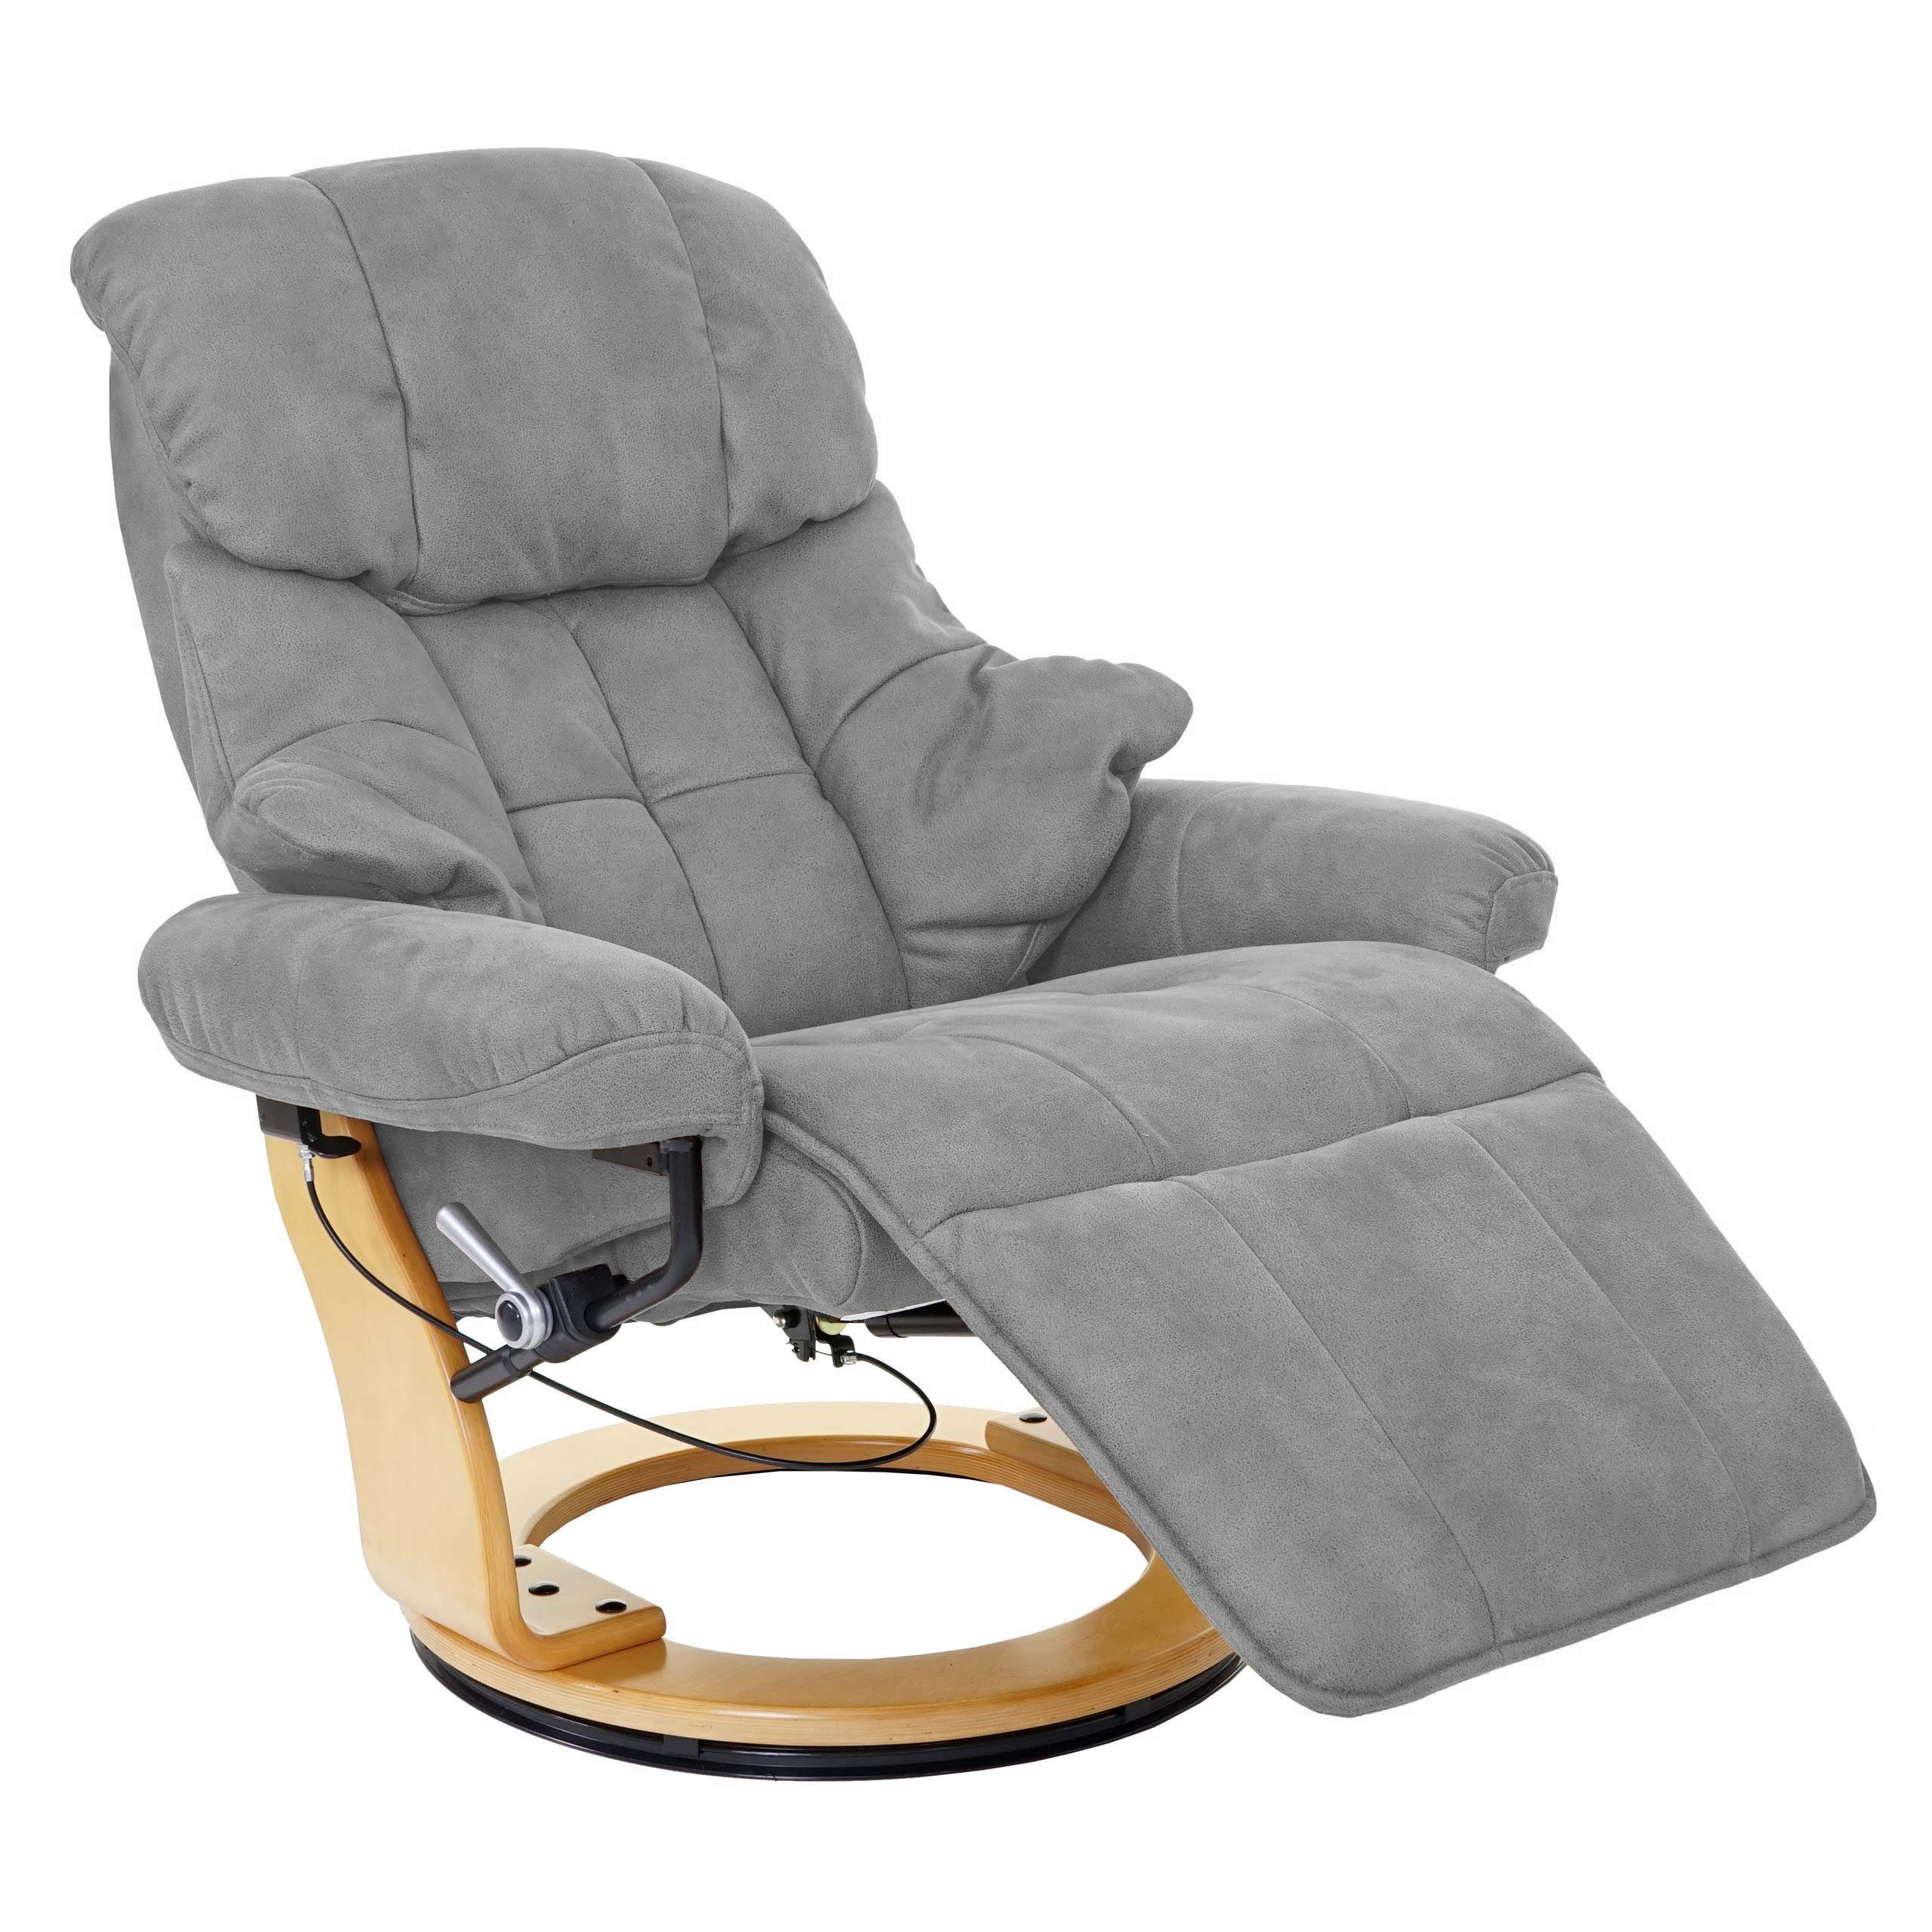 MCA furniture Relaxsessel Windsor 2-S, Fußstütze und Rückenlehne separat verstellbar, extradicke Polsterung hellgrau, naturbraun